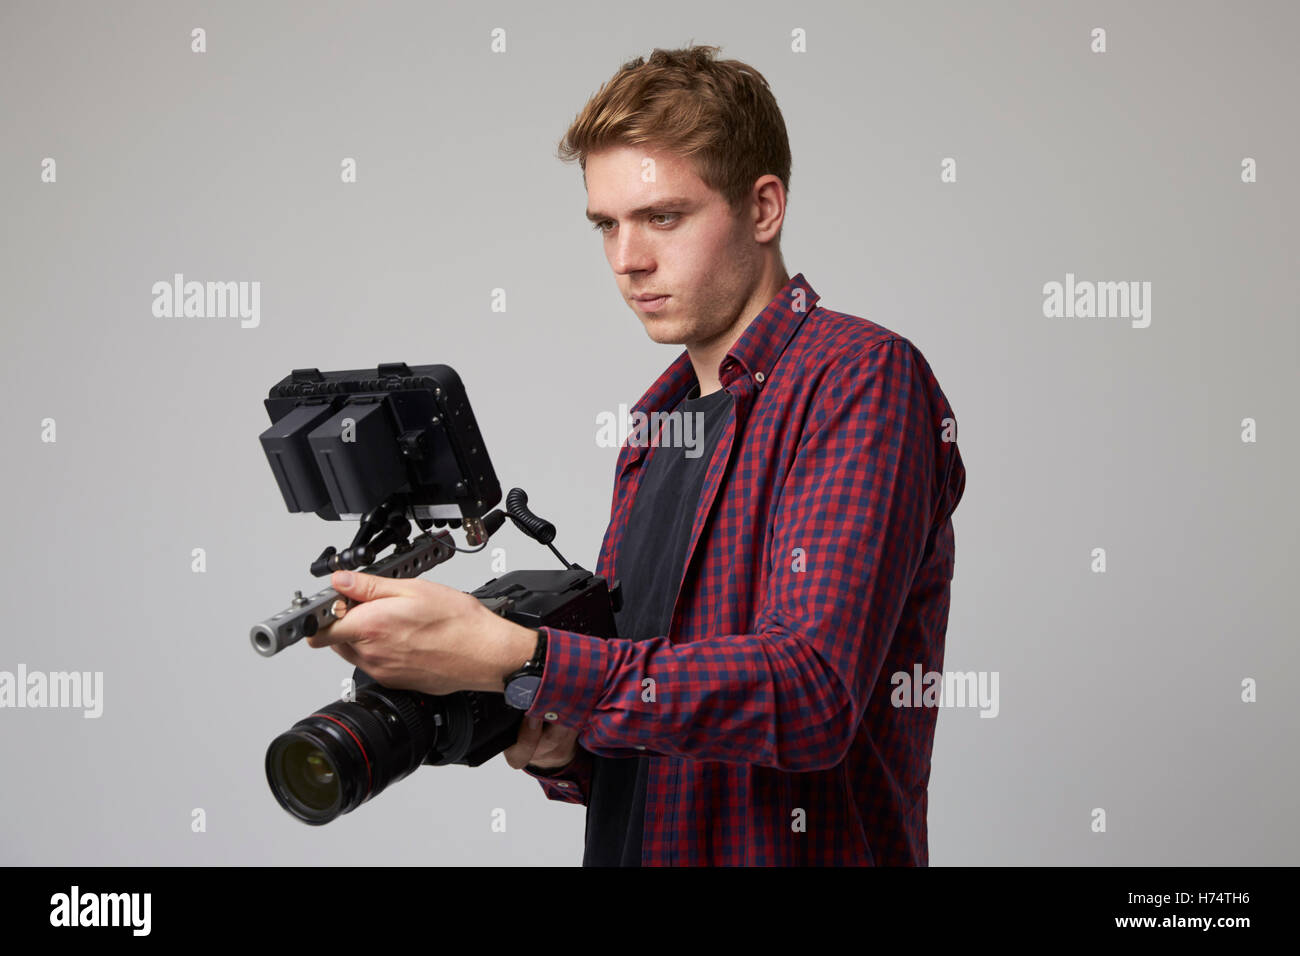 Studio Portrait Of Male Videographer With Film Camera Stock Photo